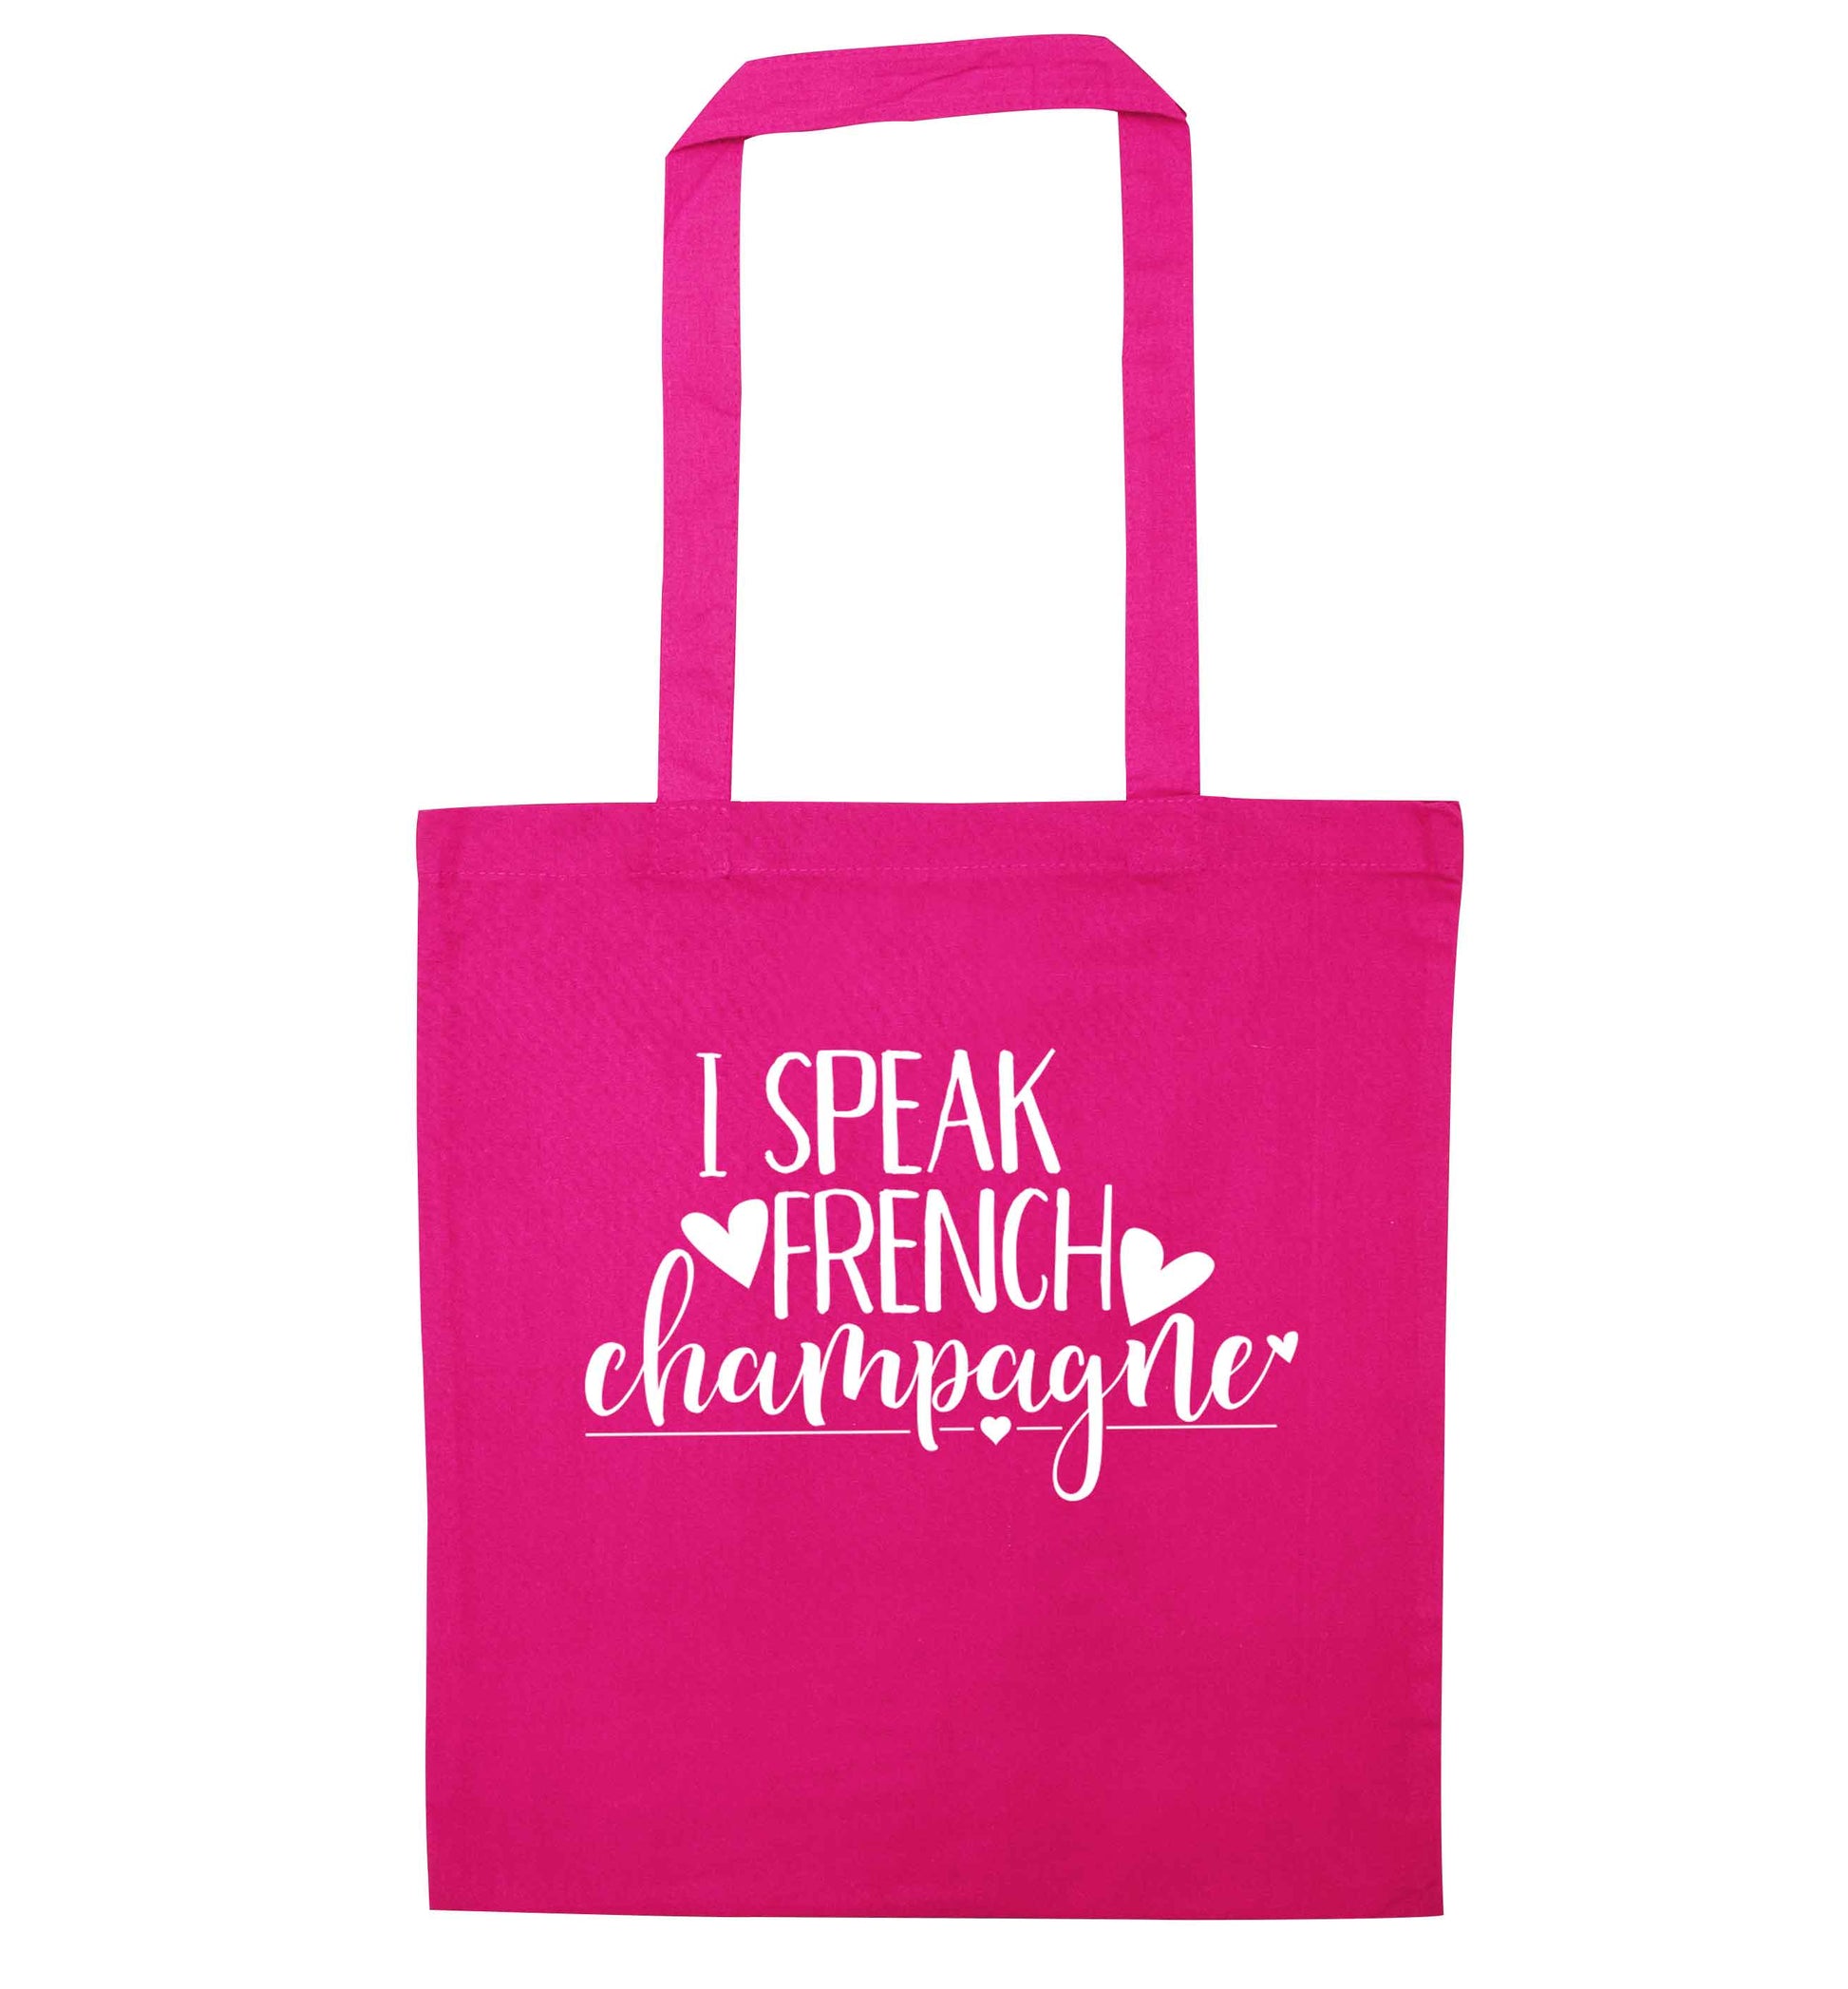 I speak french champagne pink tote bag